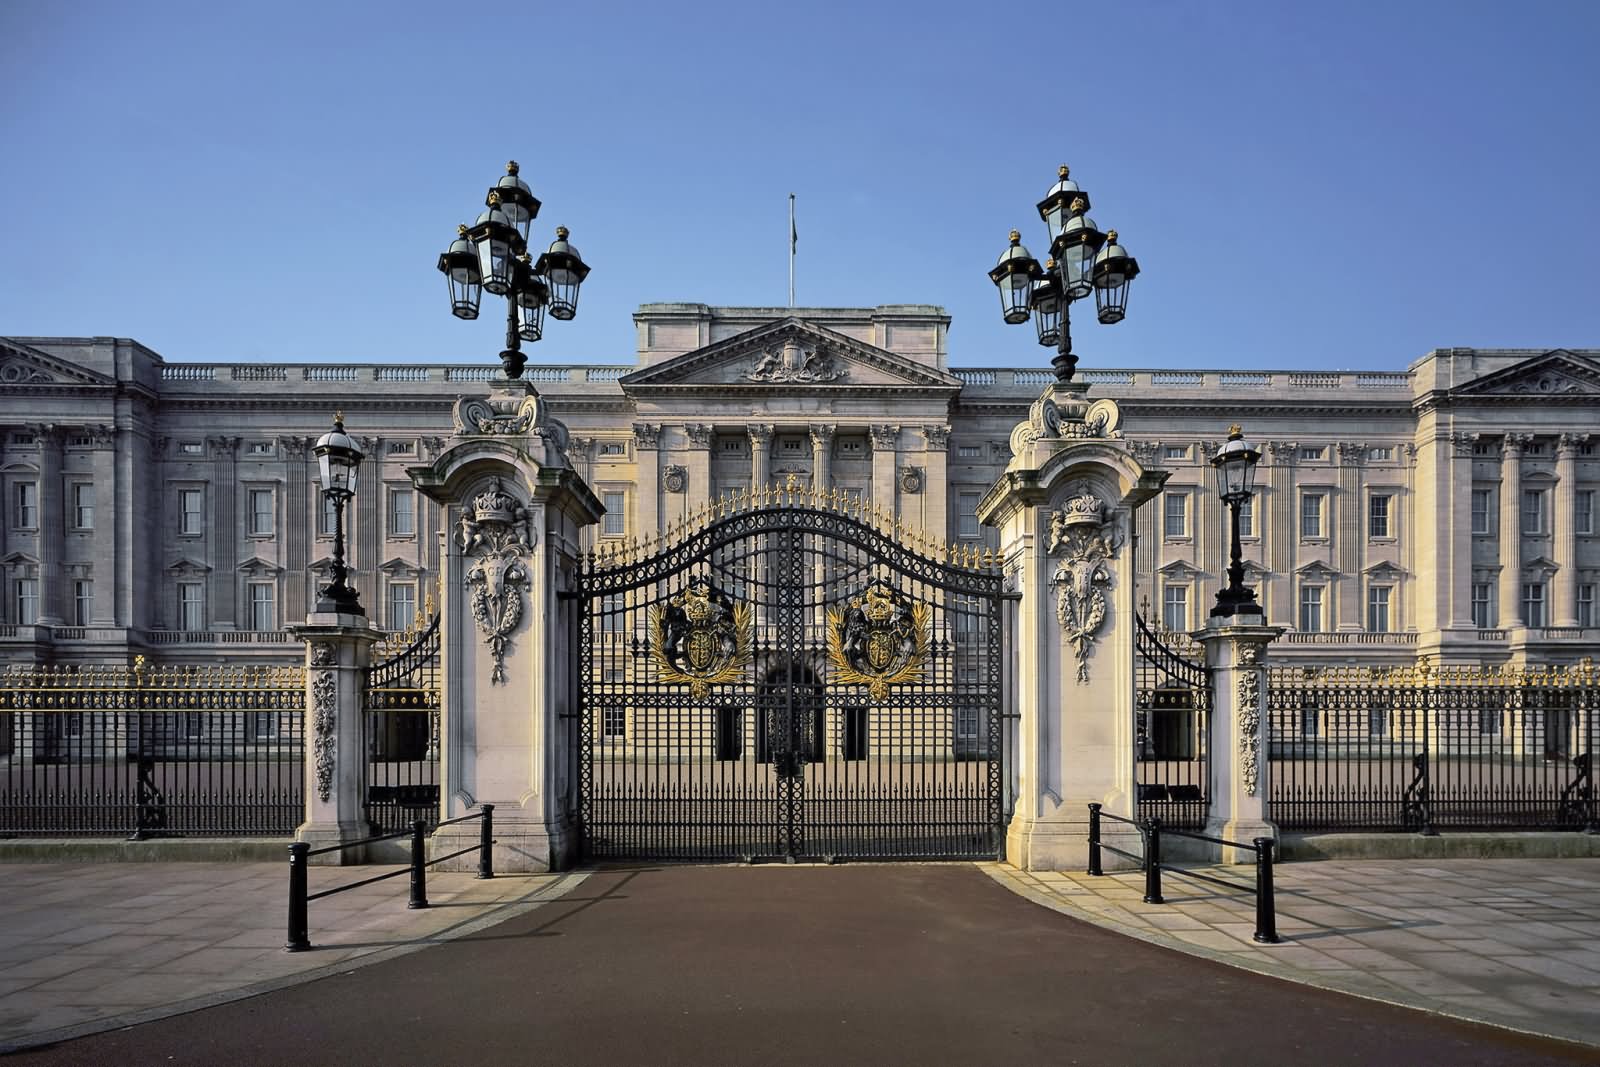 Main Entrance Gate Of The Buckingham Palace